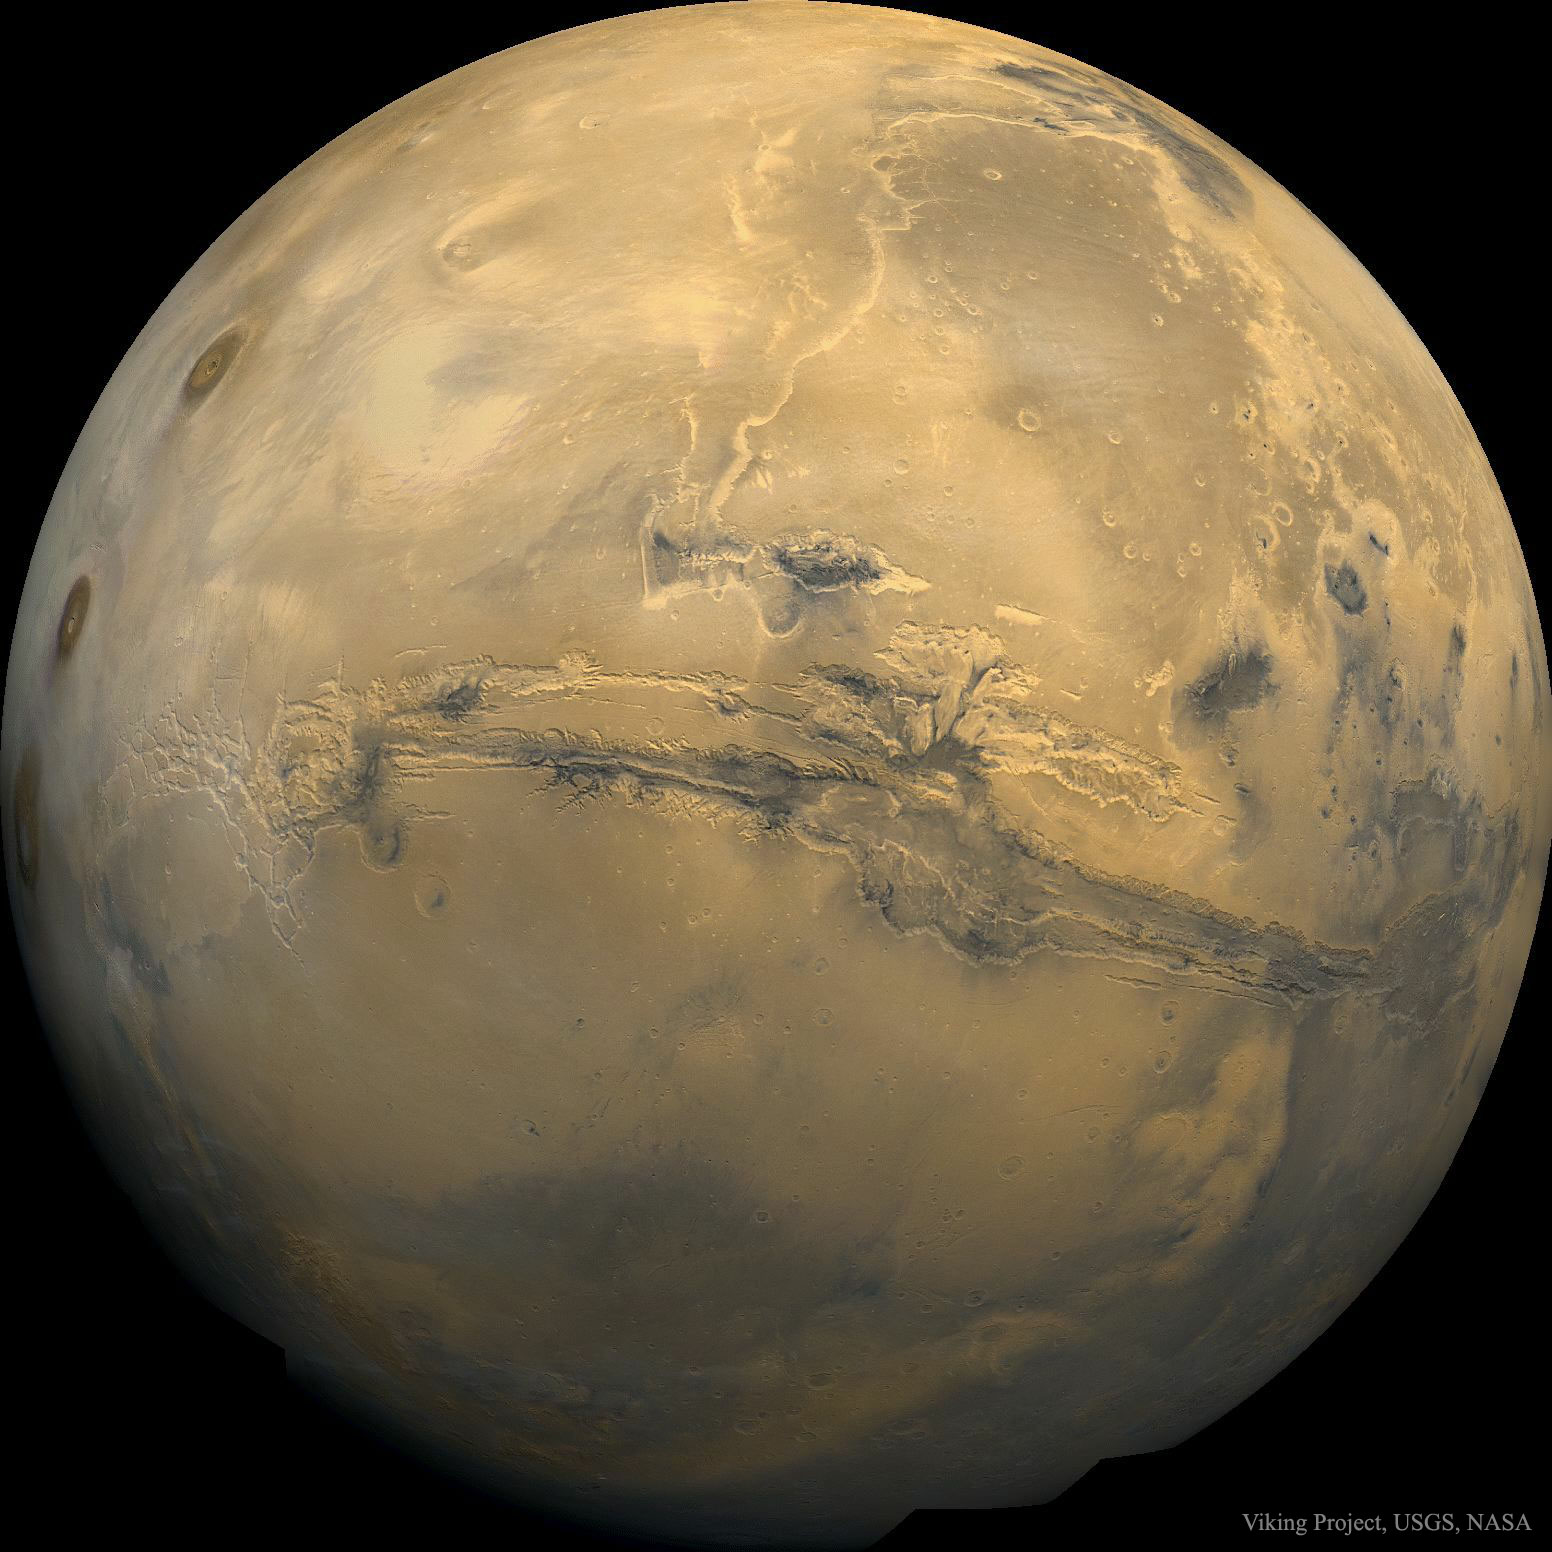 Valles Marineris: The Grand Canyon of Mars